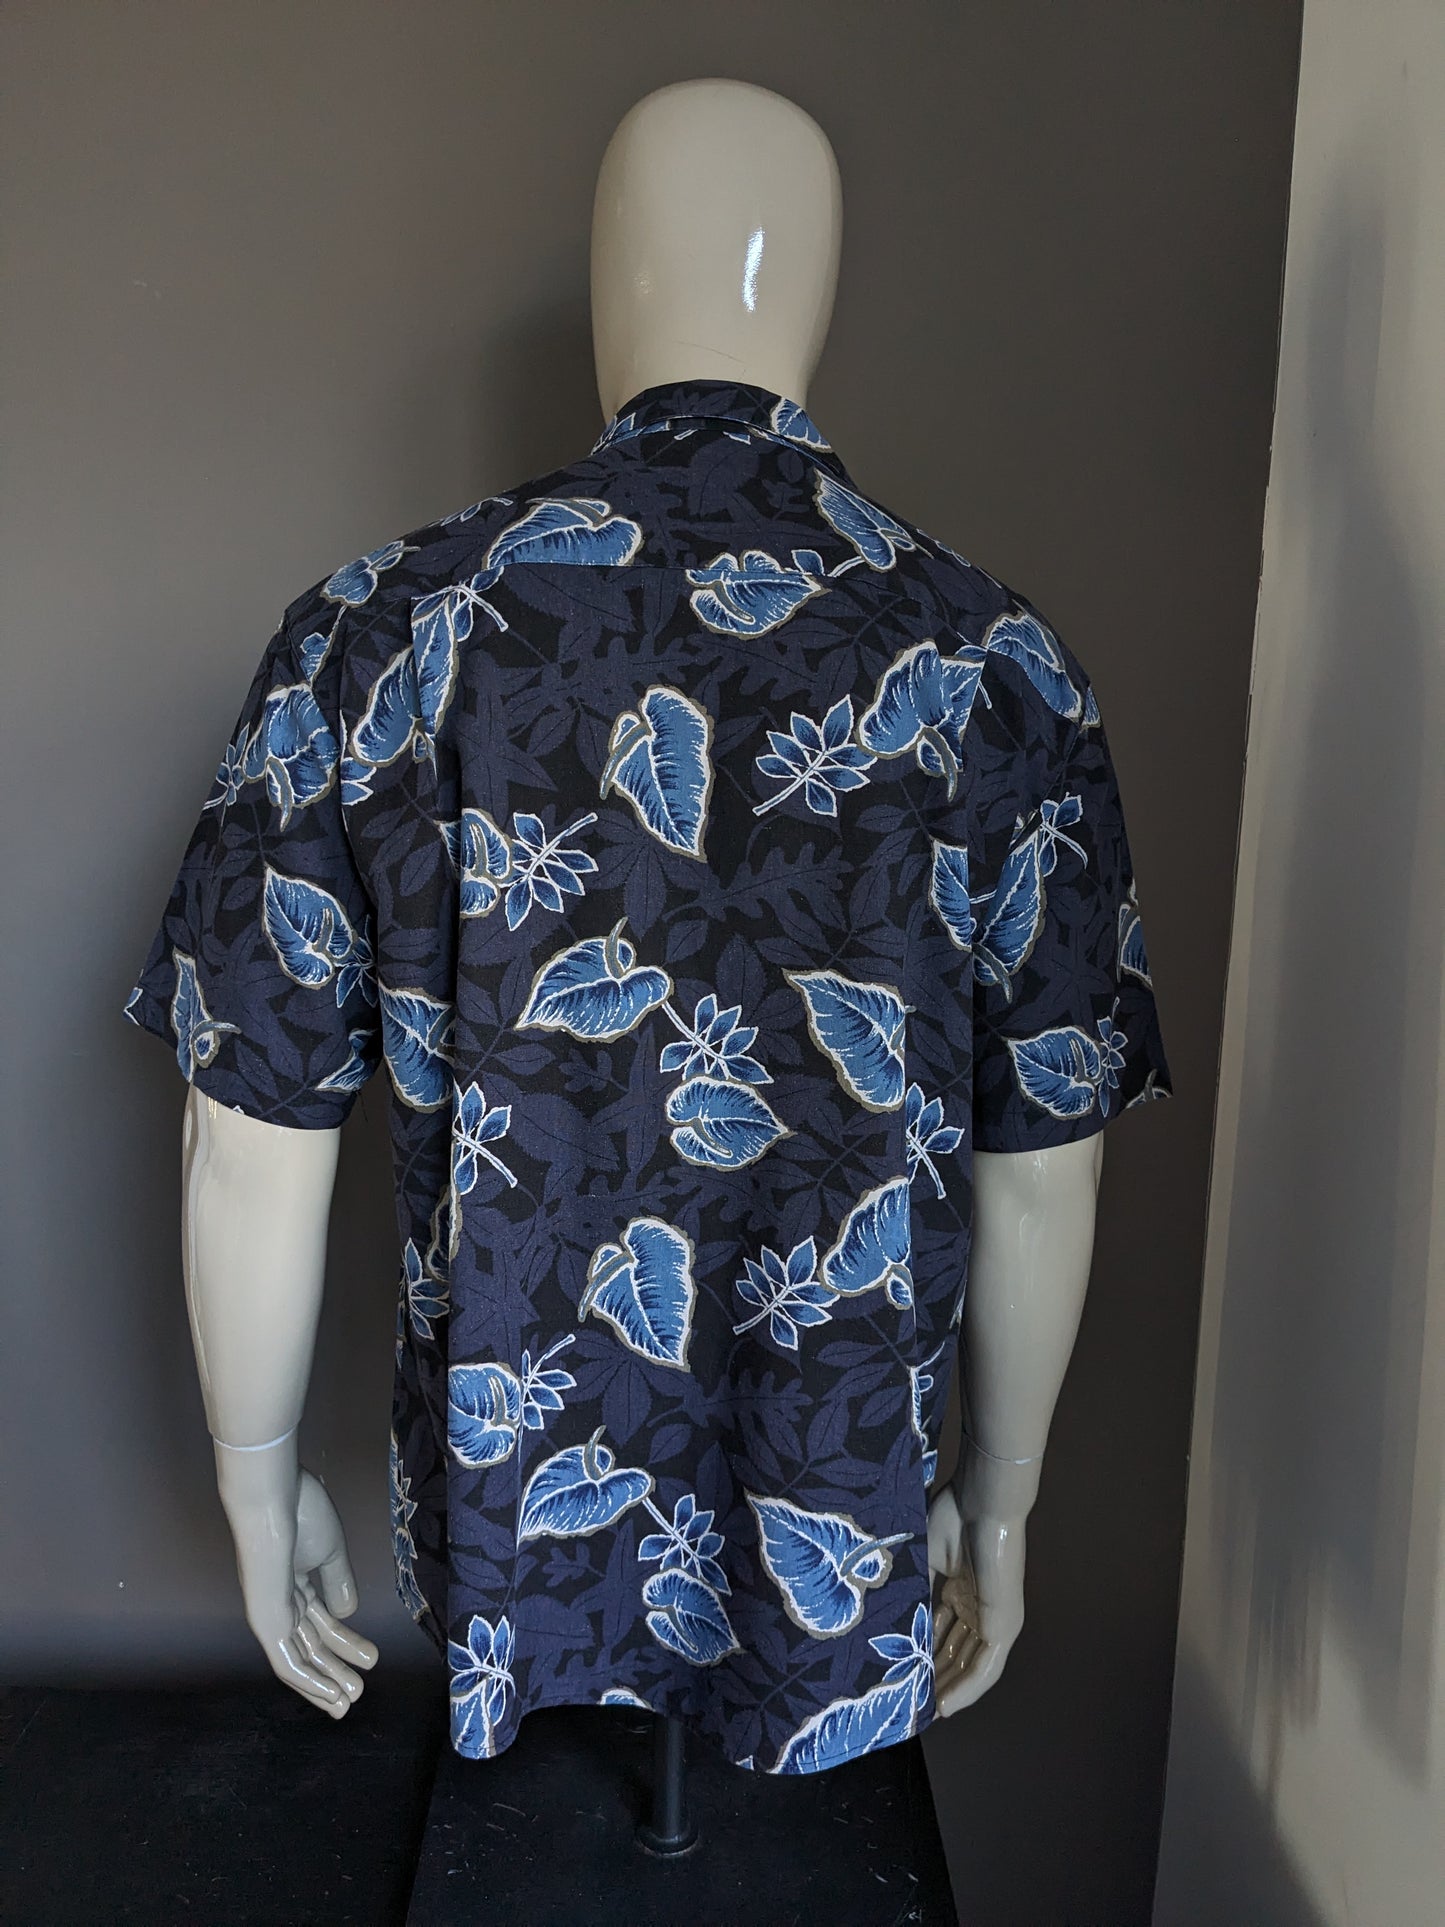 Paradise Blue Seide Hawaii Hemd Kurzarm. Blaublattmotiv. Größe xl. 70% Seide.